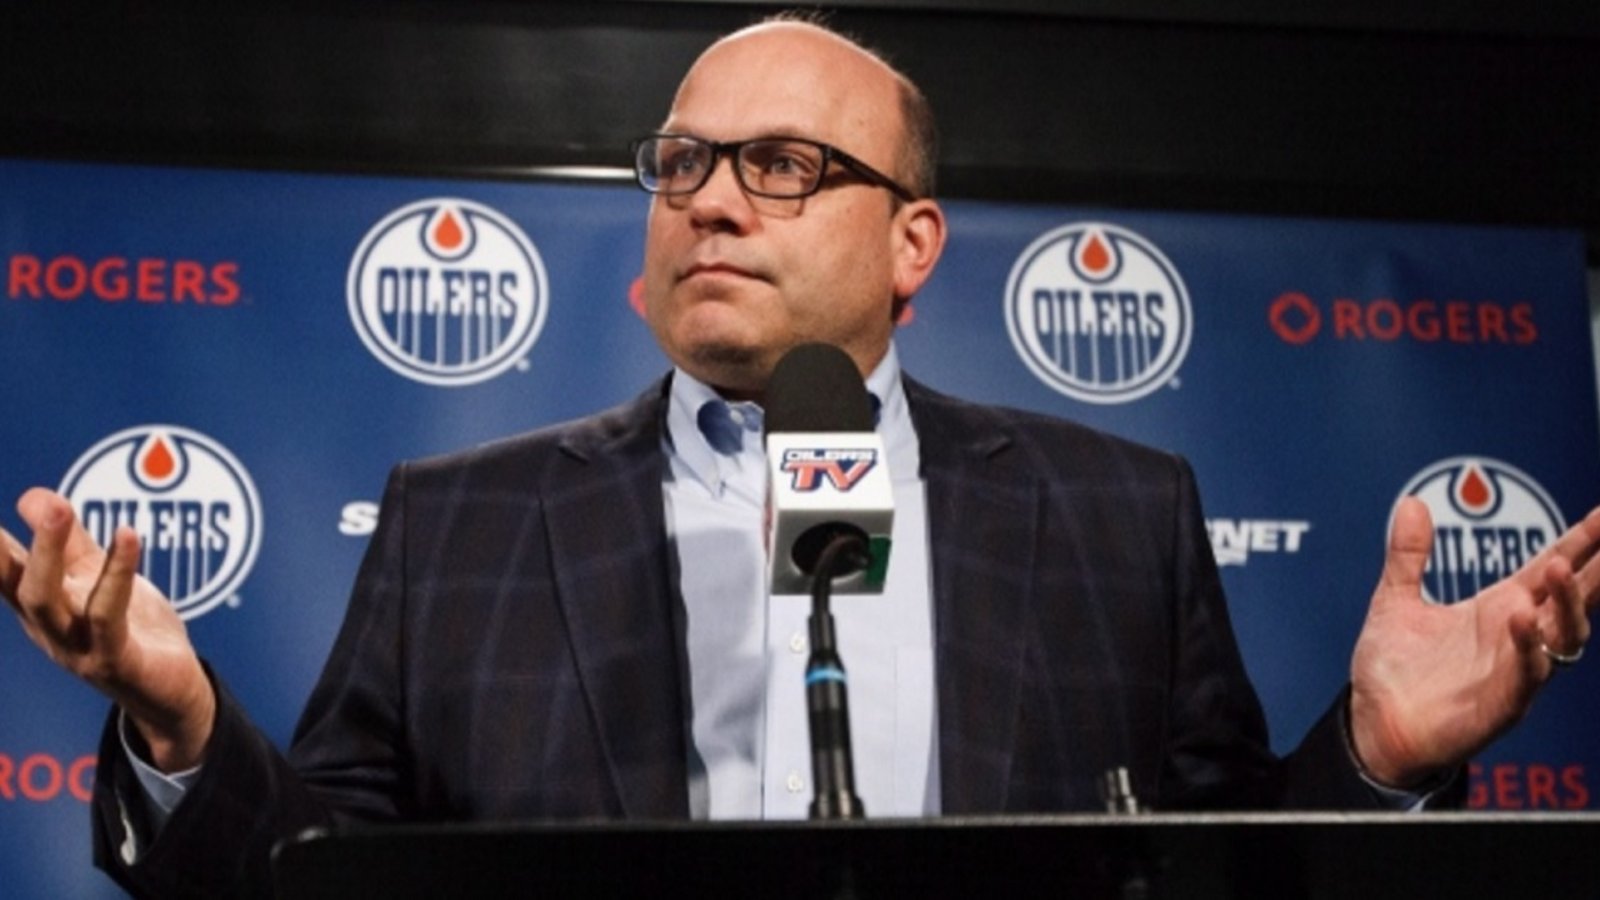 Oilers looking to re-sign veteran defenseman, have spoken to his agent.